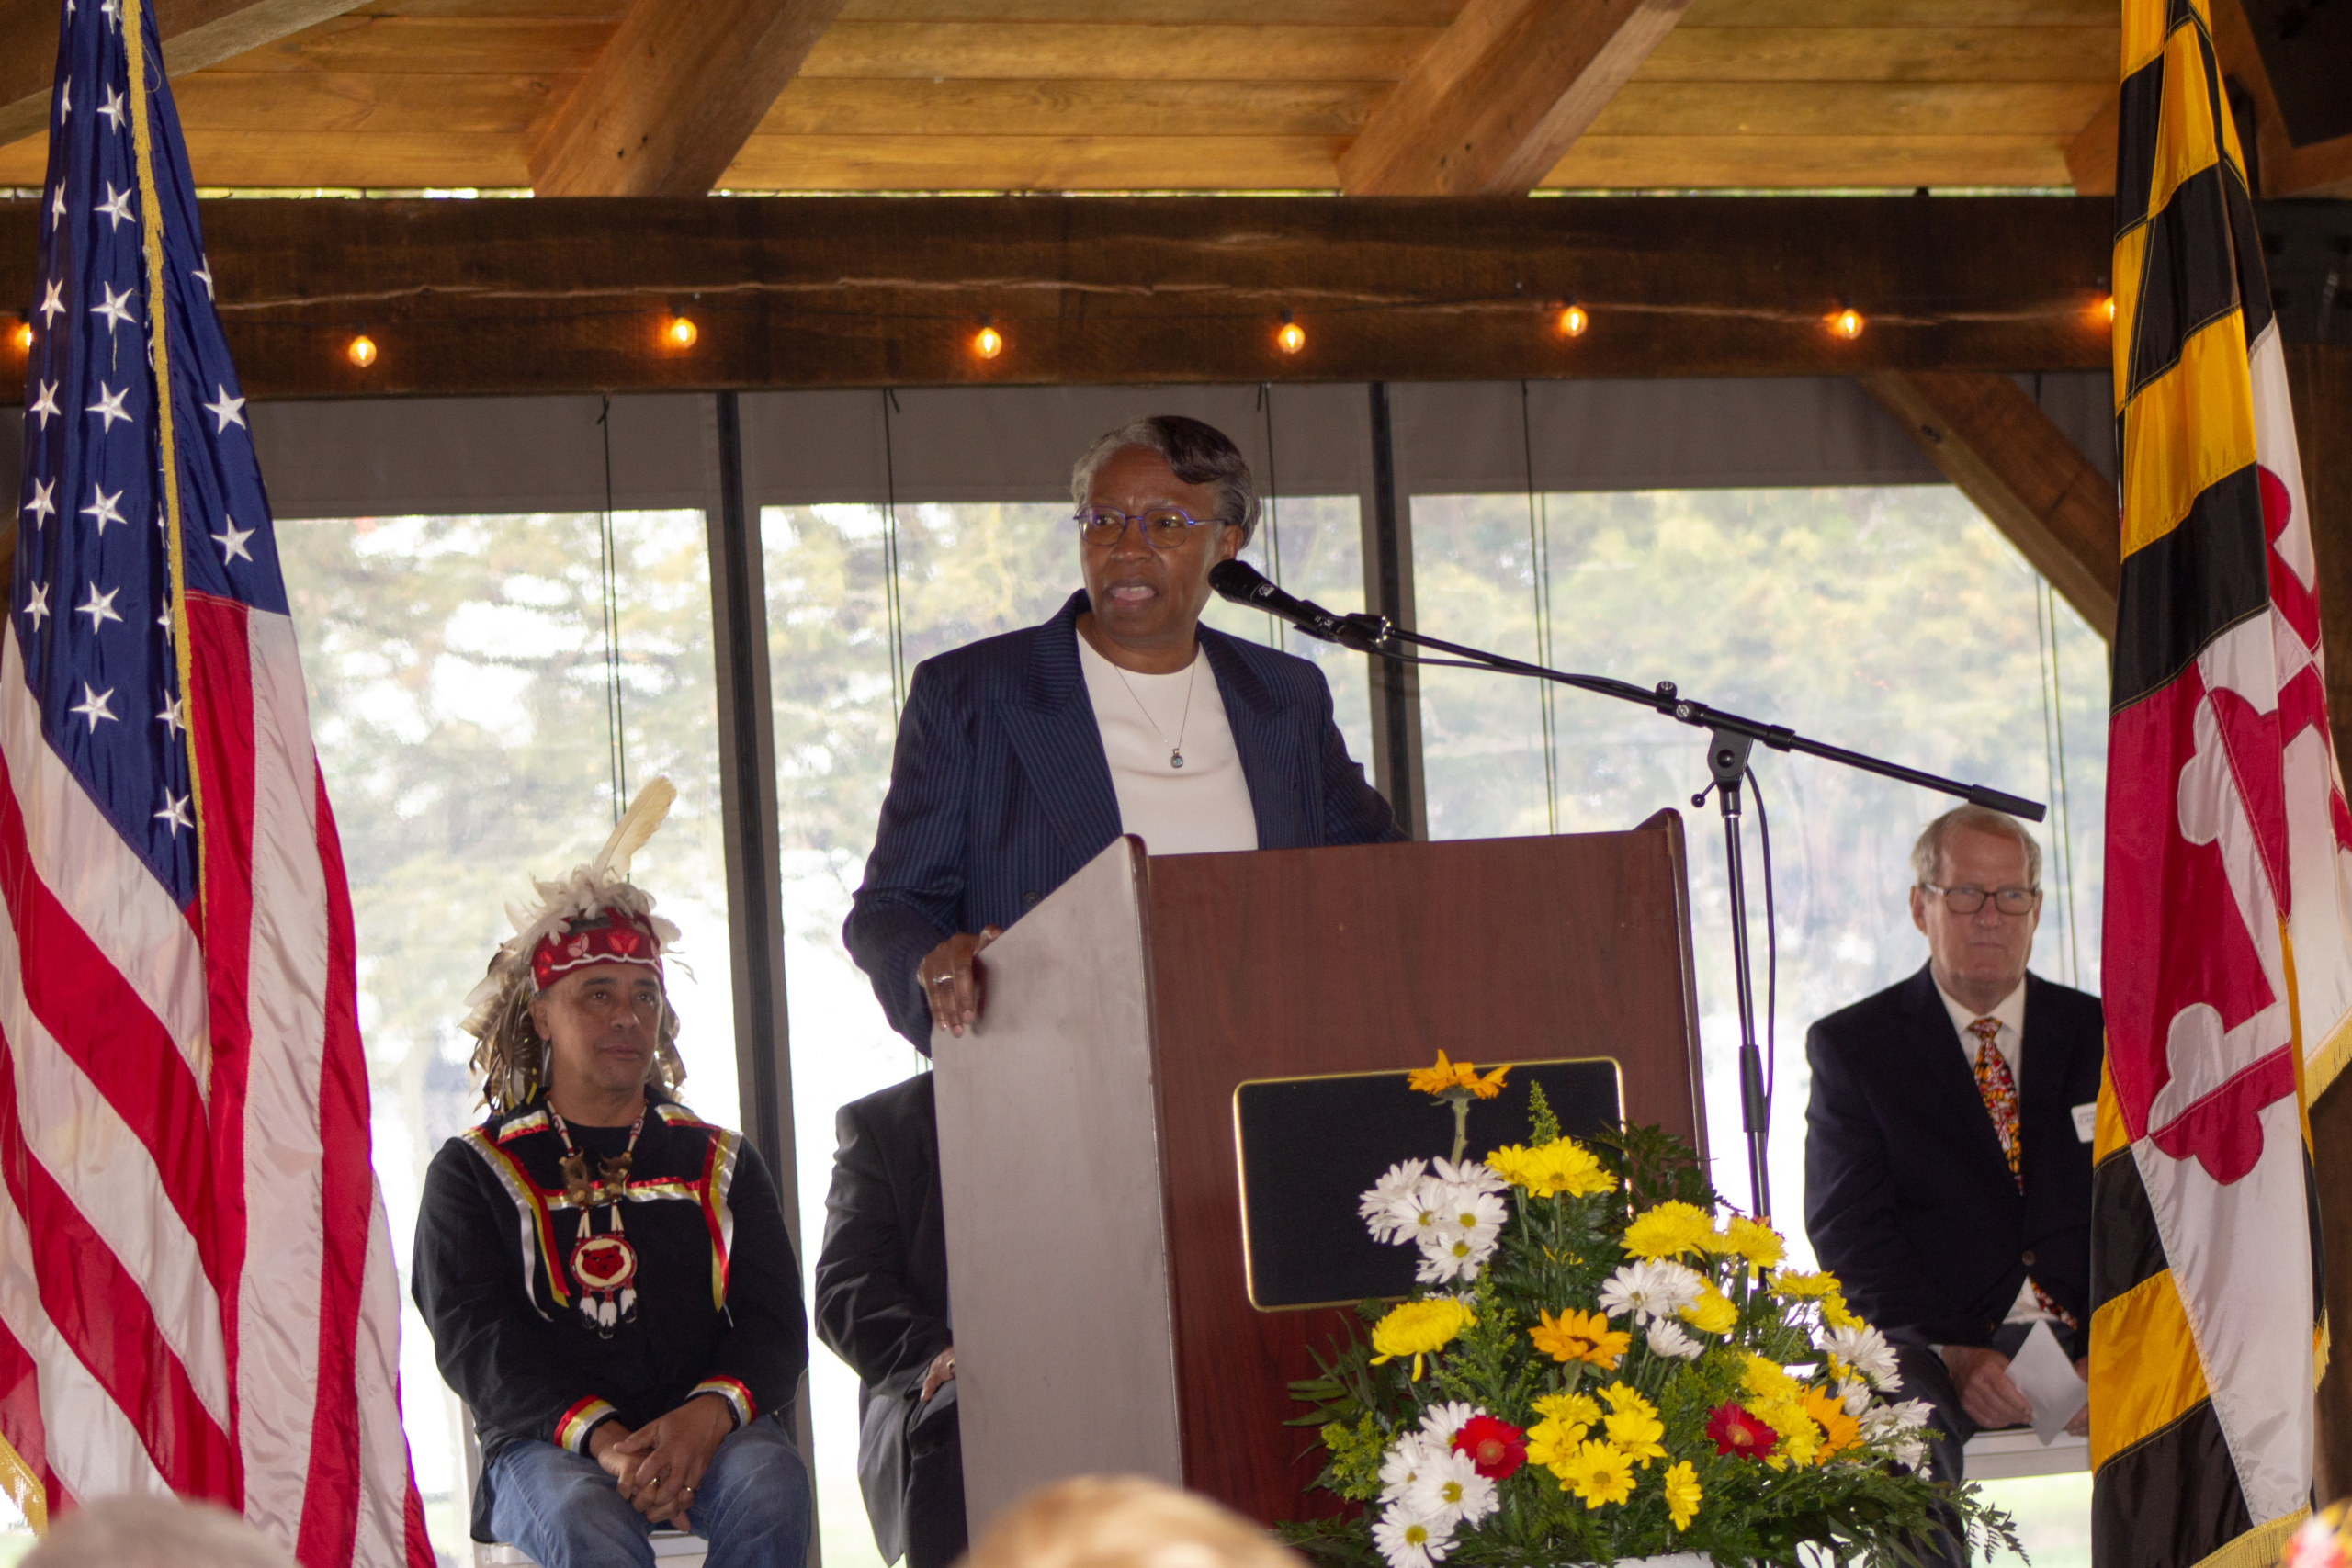 President Jordan gives the keynote address under the pavilion at Historic St. Mary's City